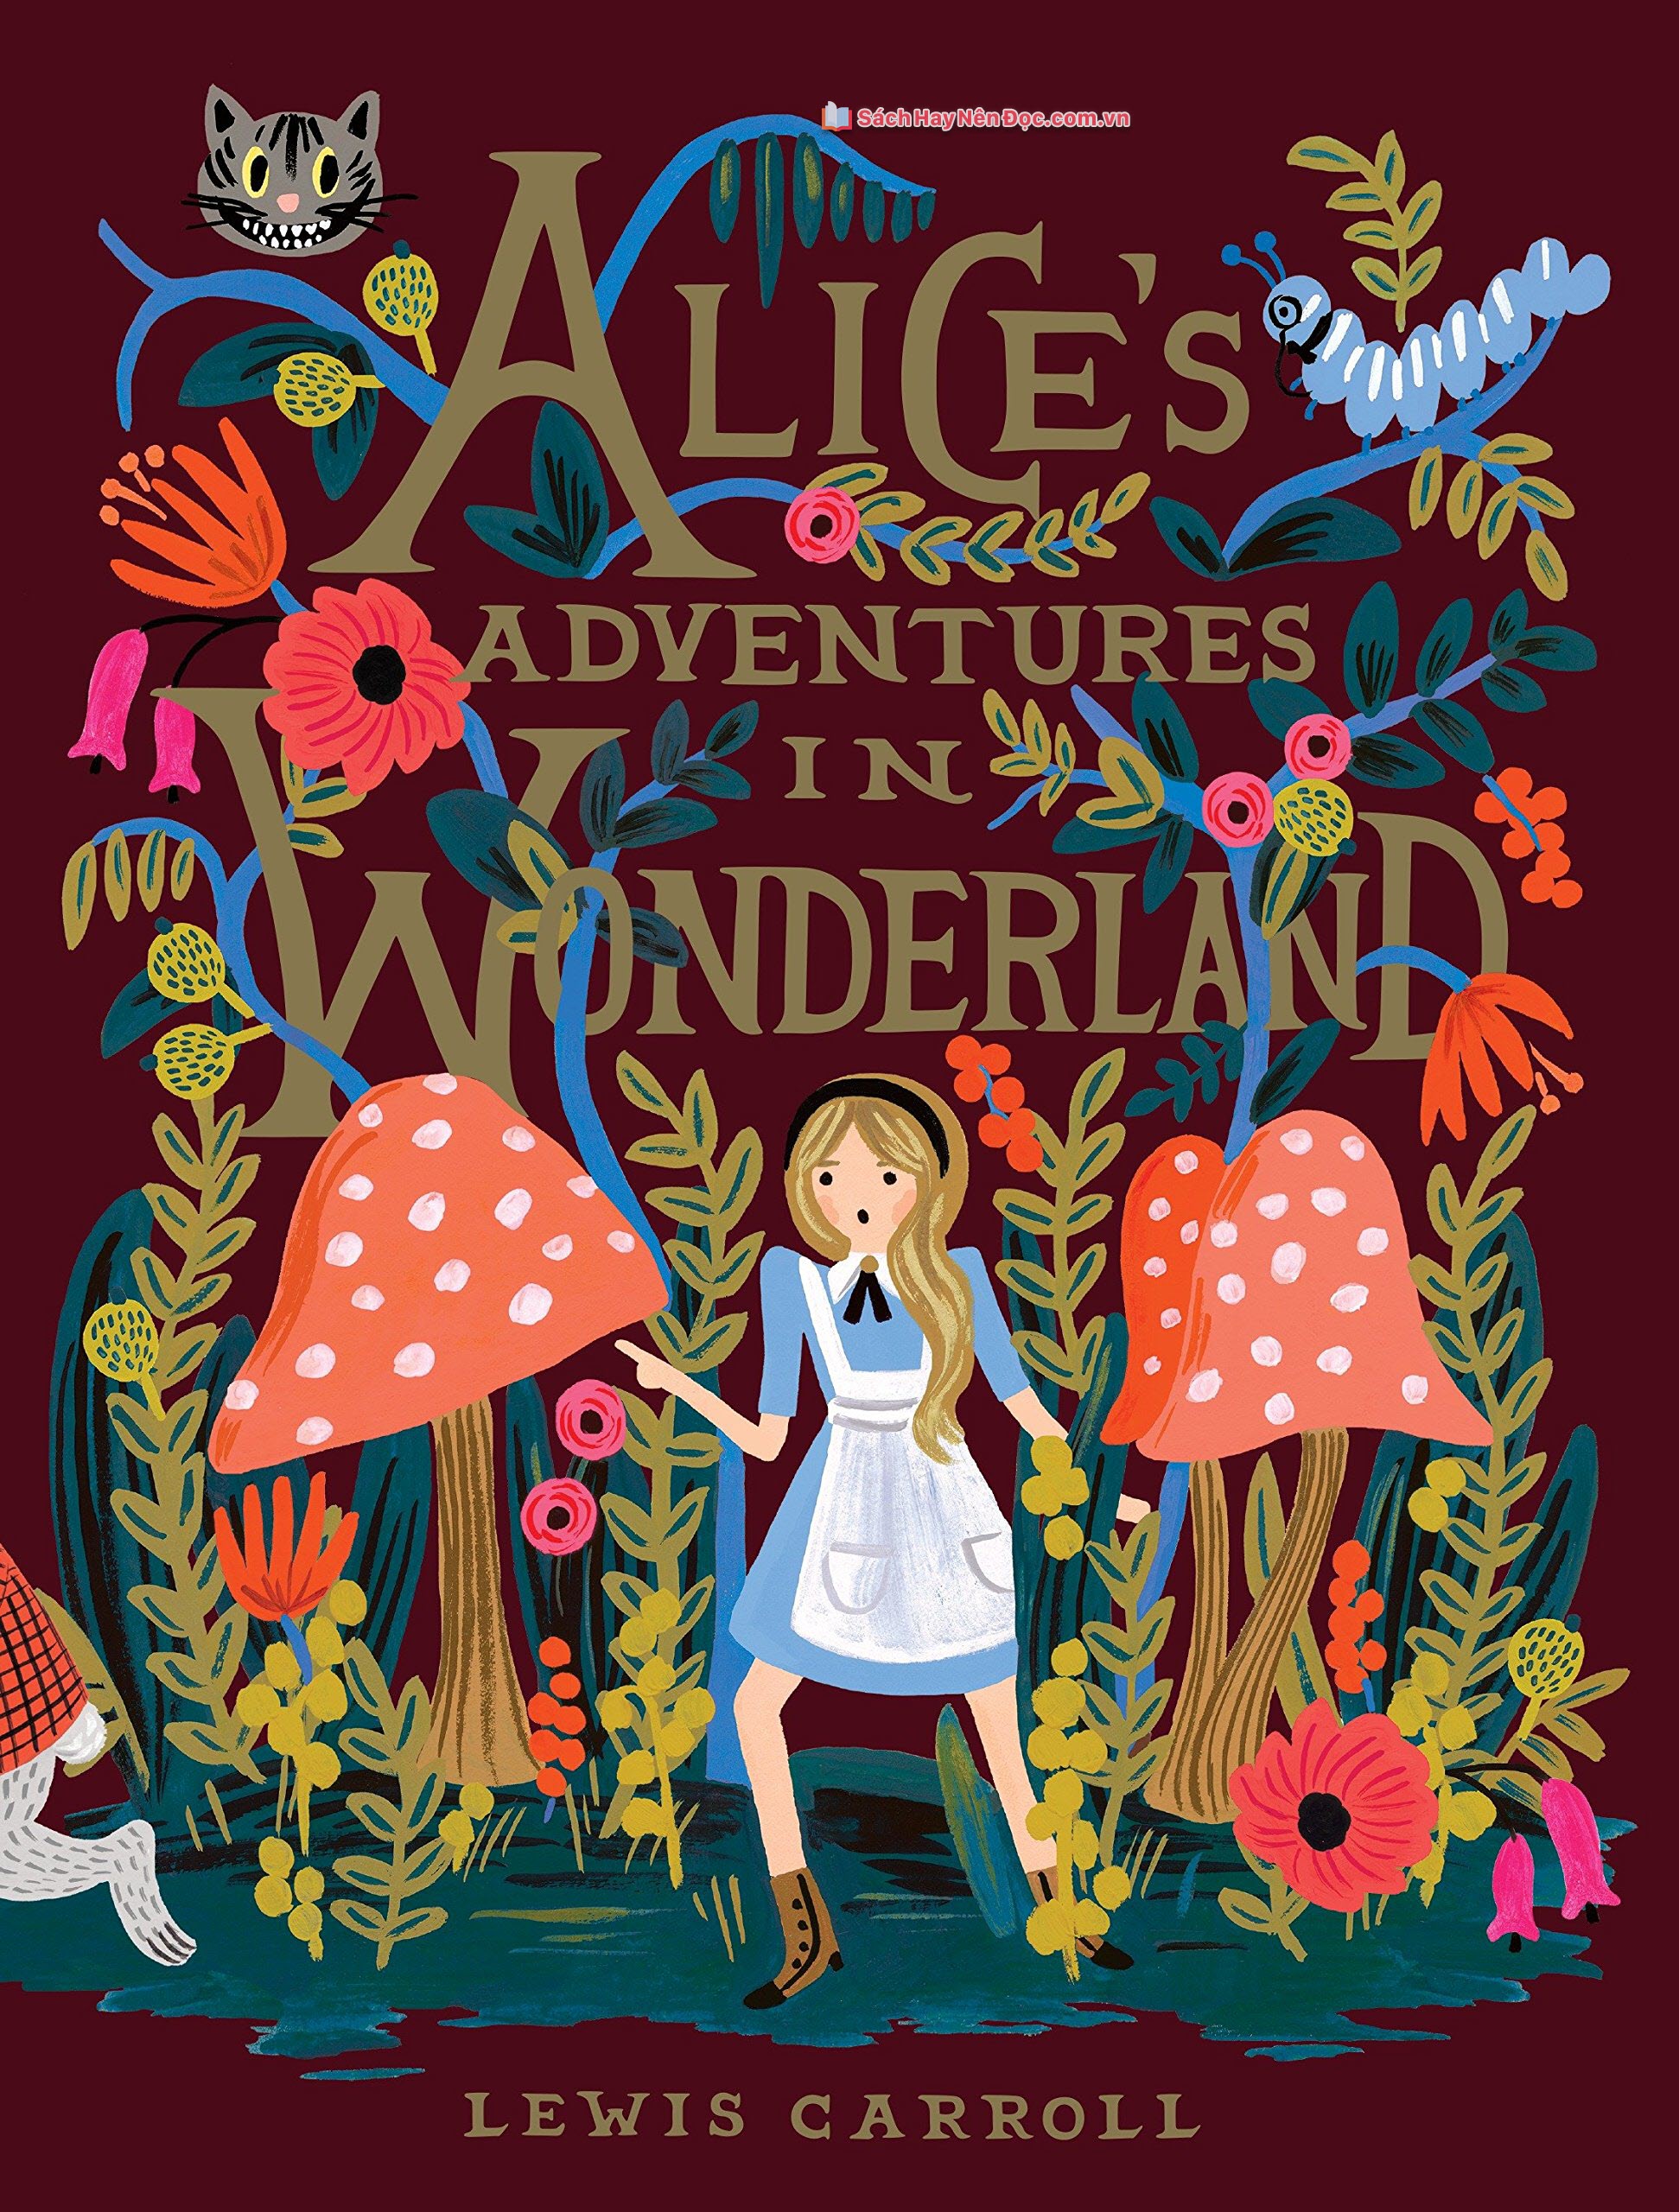 Alice’s adventures in wonderland - Lewis Carroll